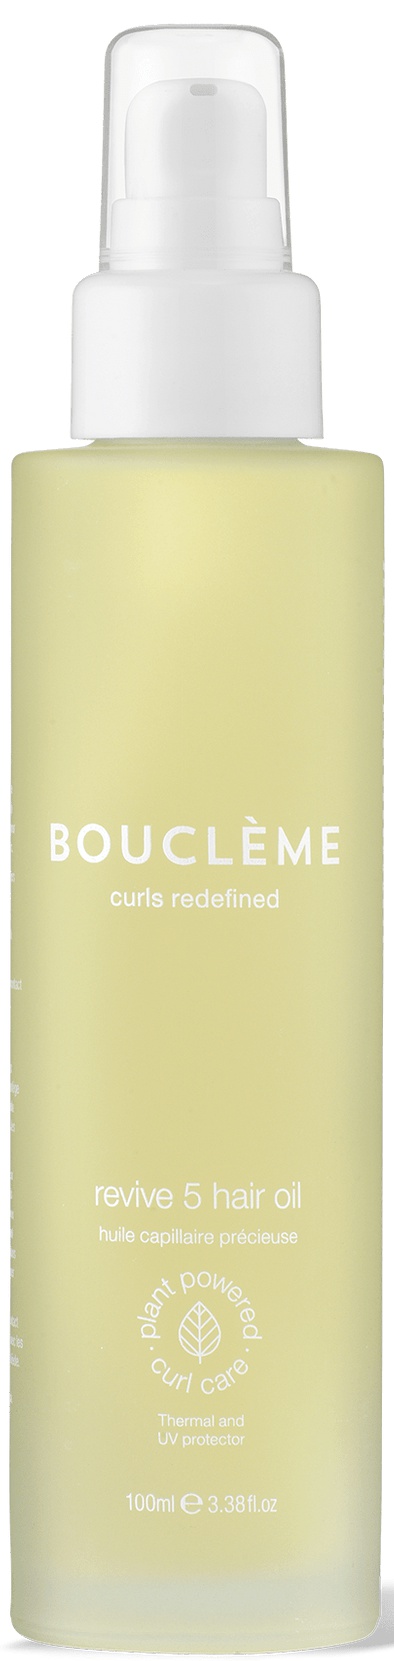 Boucléme Revive 5 Hair Oil